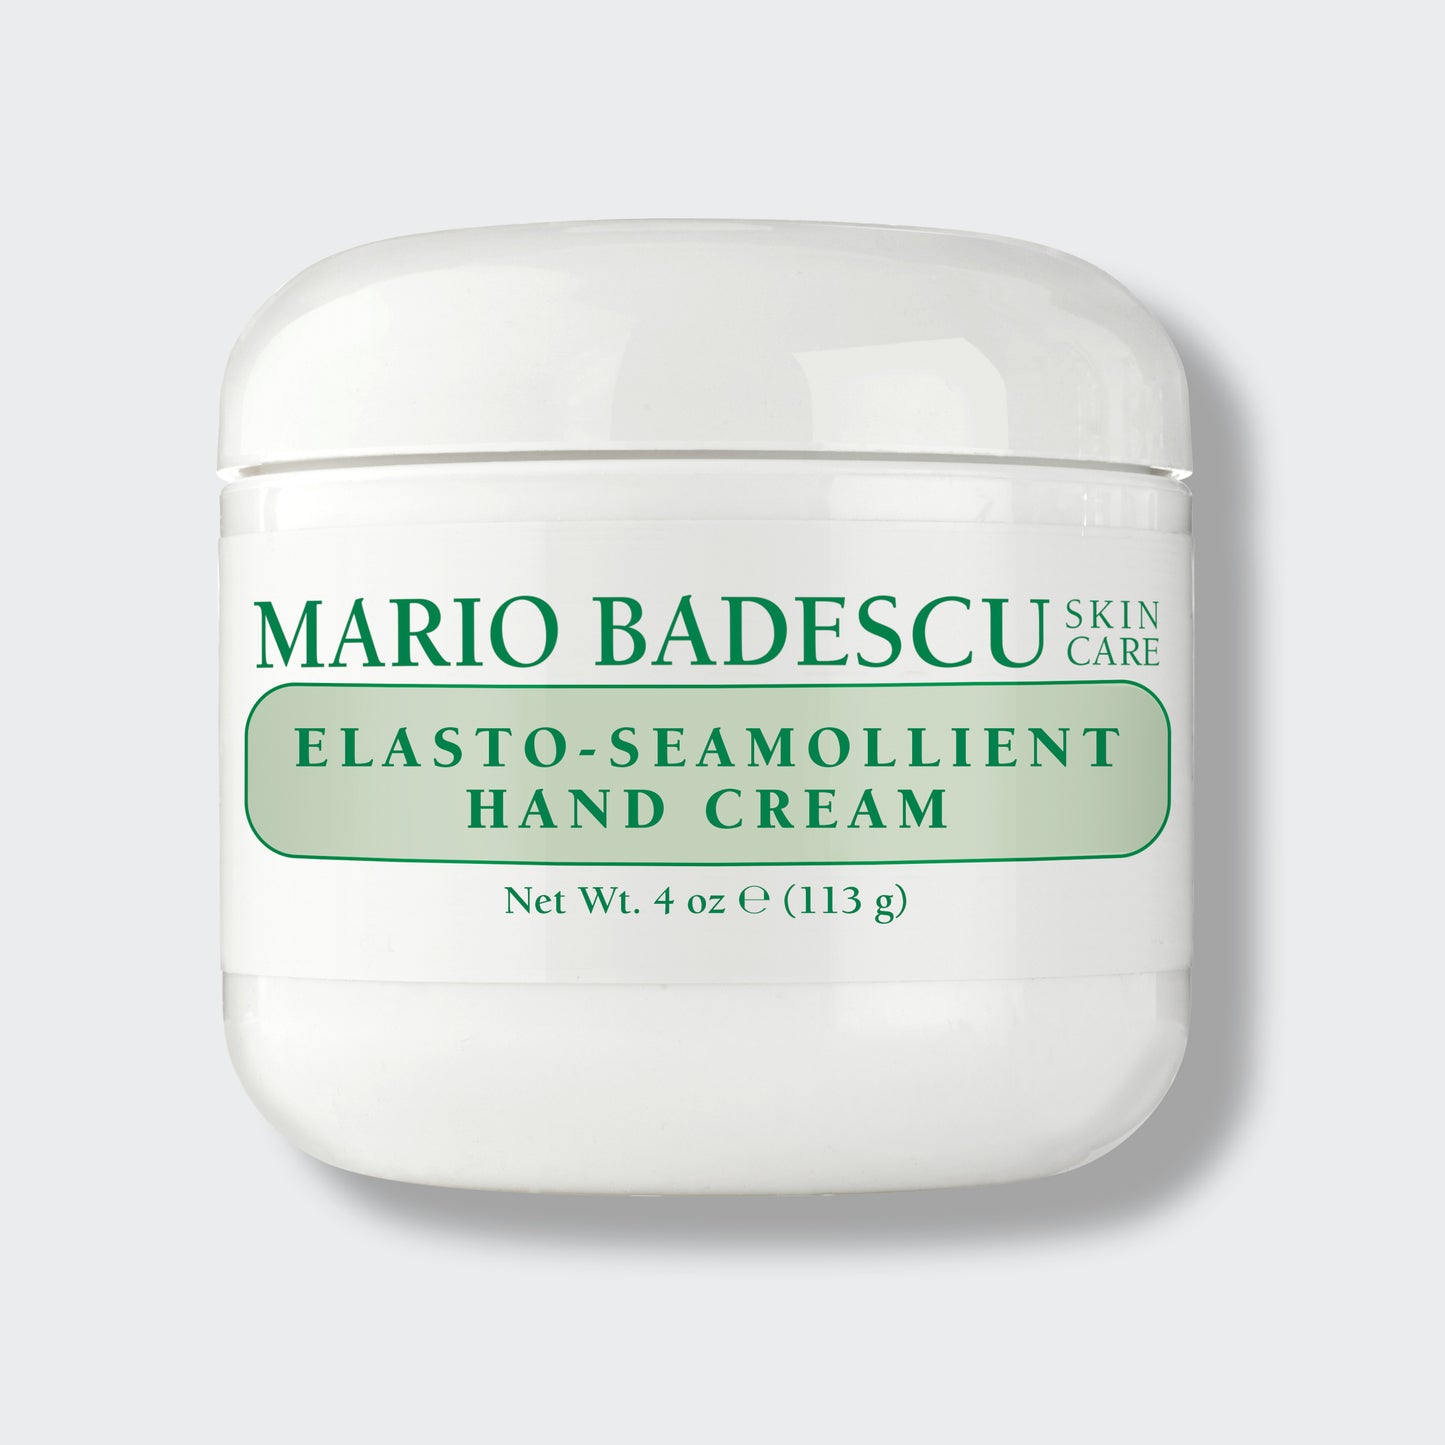 Mario Badescu Elasto-Seamollient Hand Cream